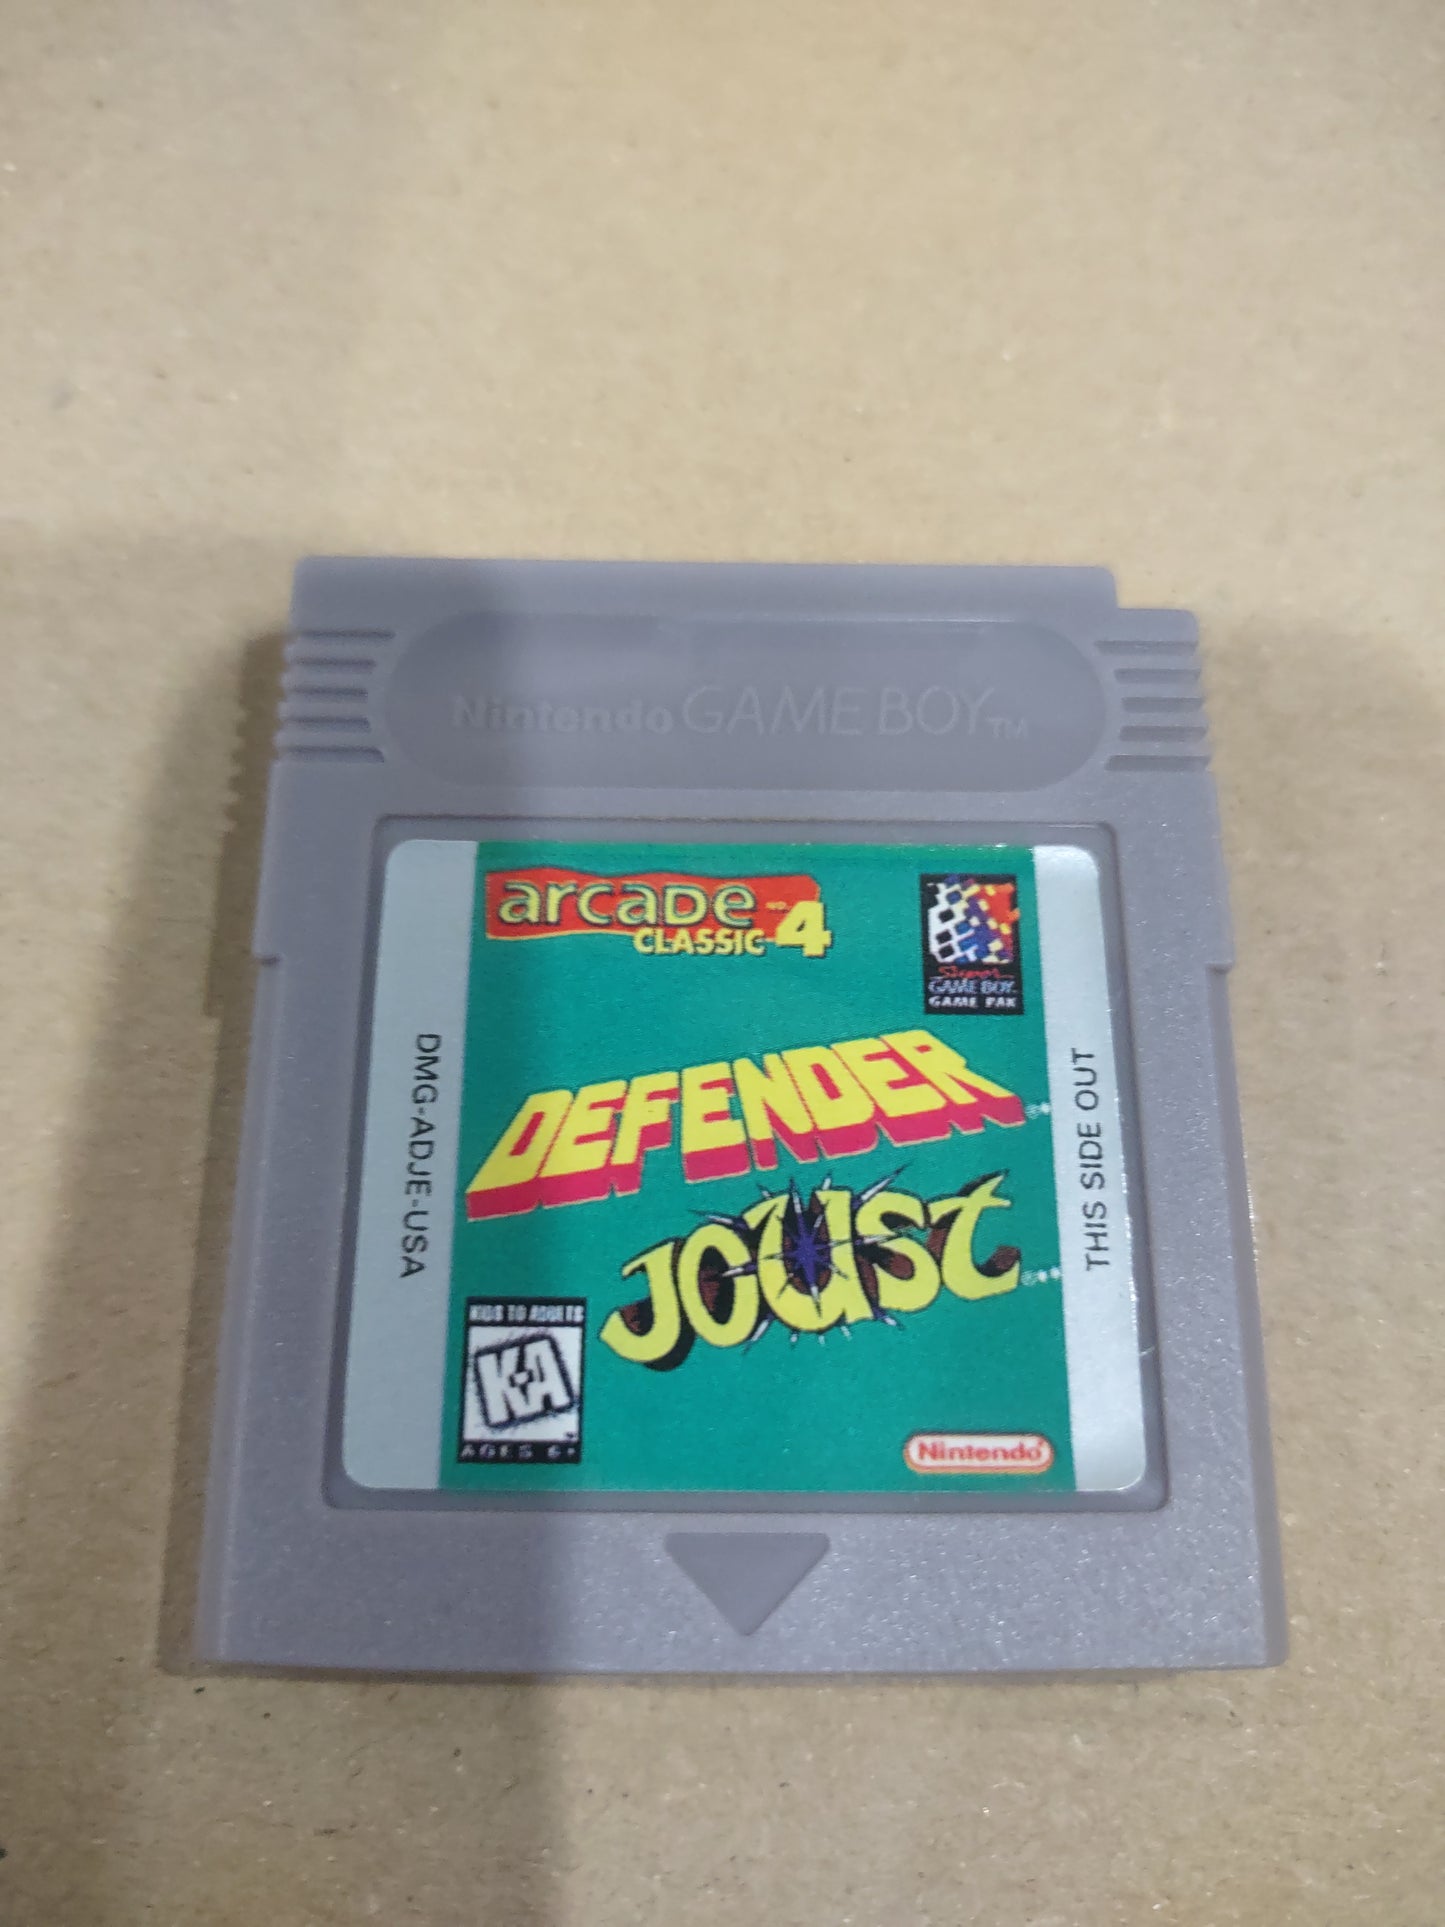 Gioco Nintendo game boy Arcade Classic 4 Defender Joust